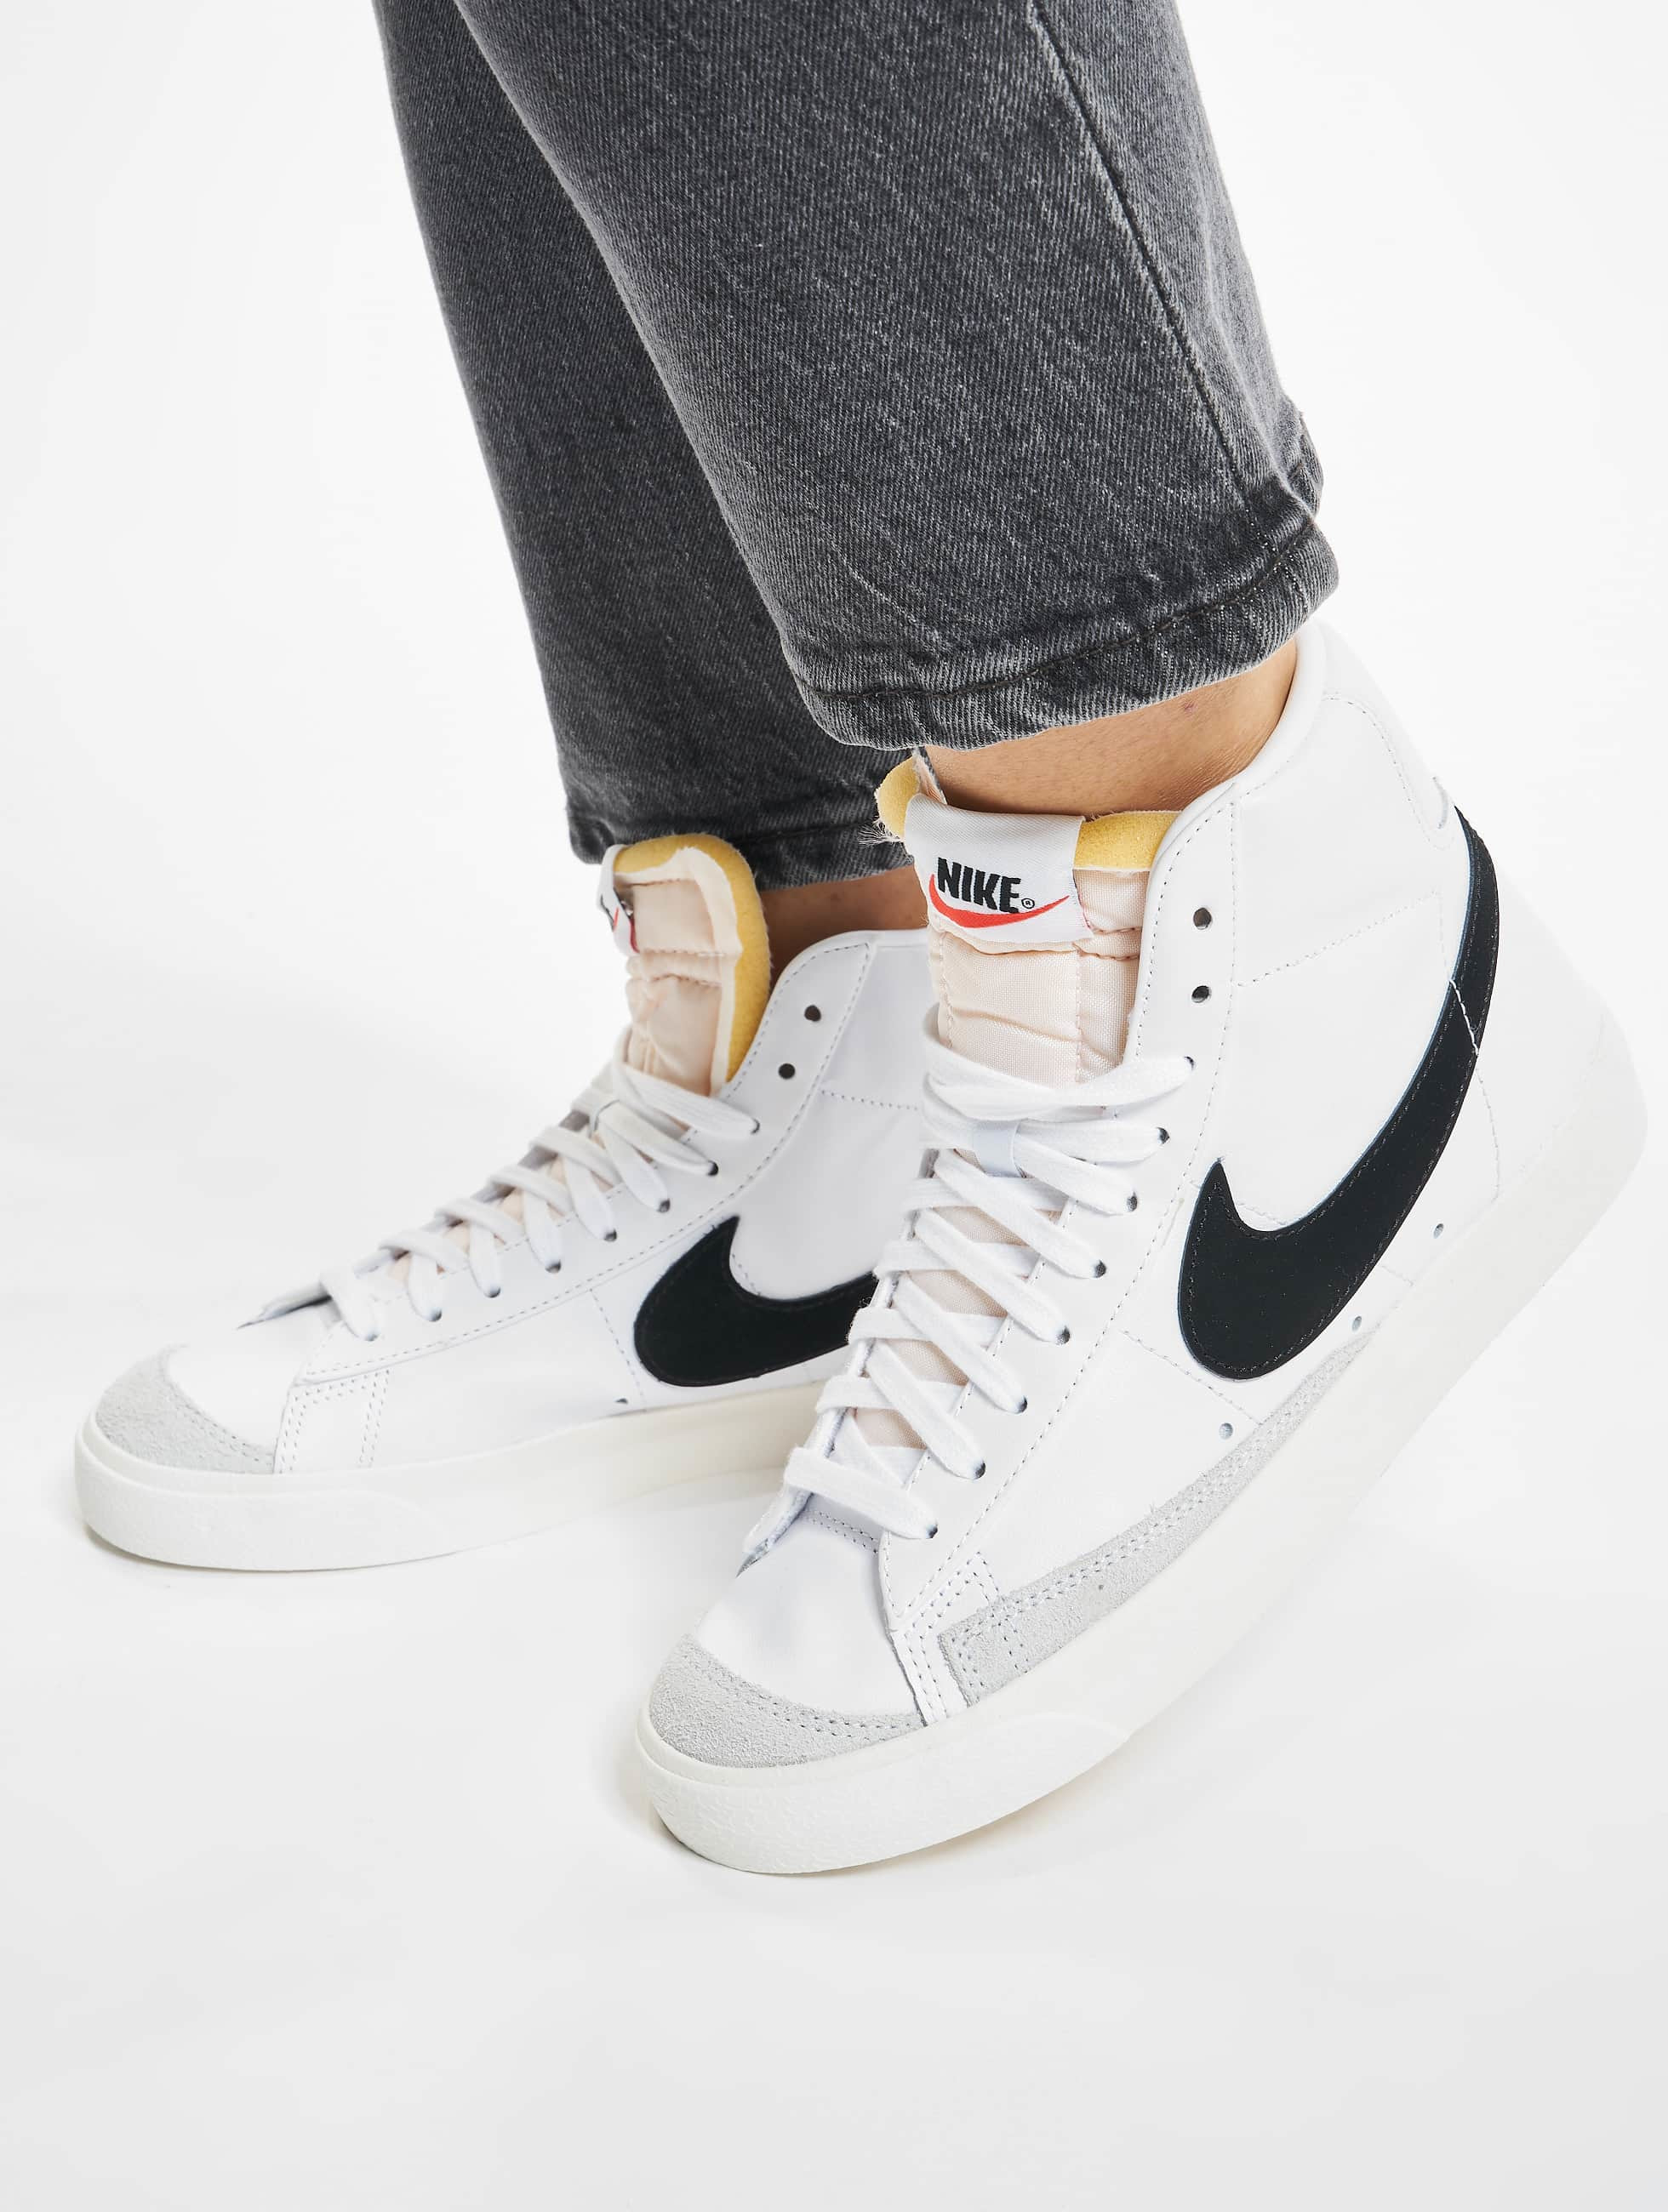 Bezighouden Regeneratie rukken Nike Damen Sneaker Blazer Mid '77 in weiß 784782